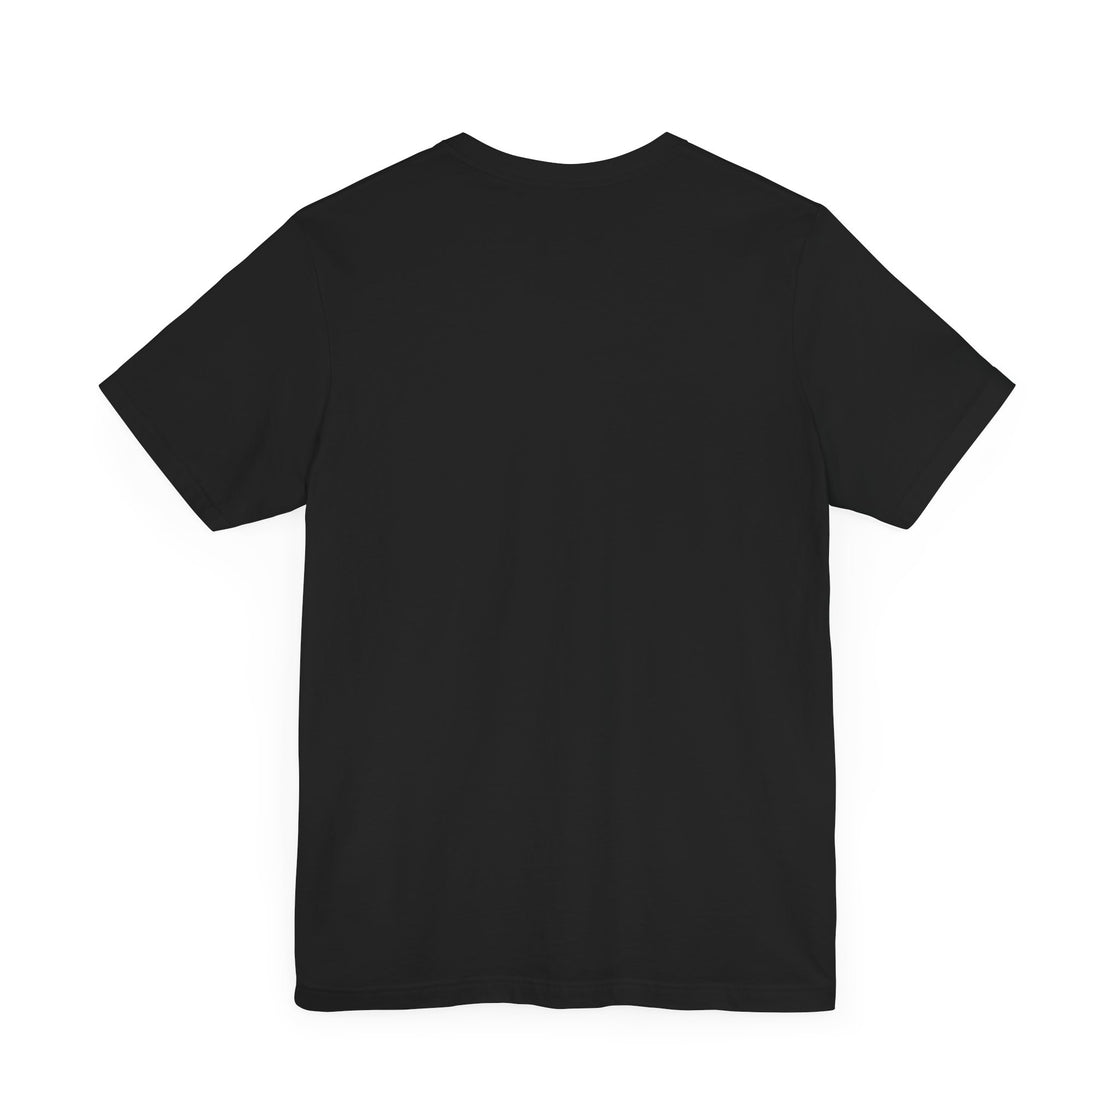 Subtronics Jersey Short Sleeve Tee Tshirt (Asian Art)